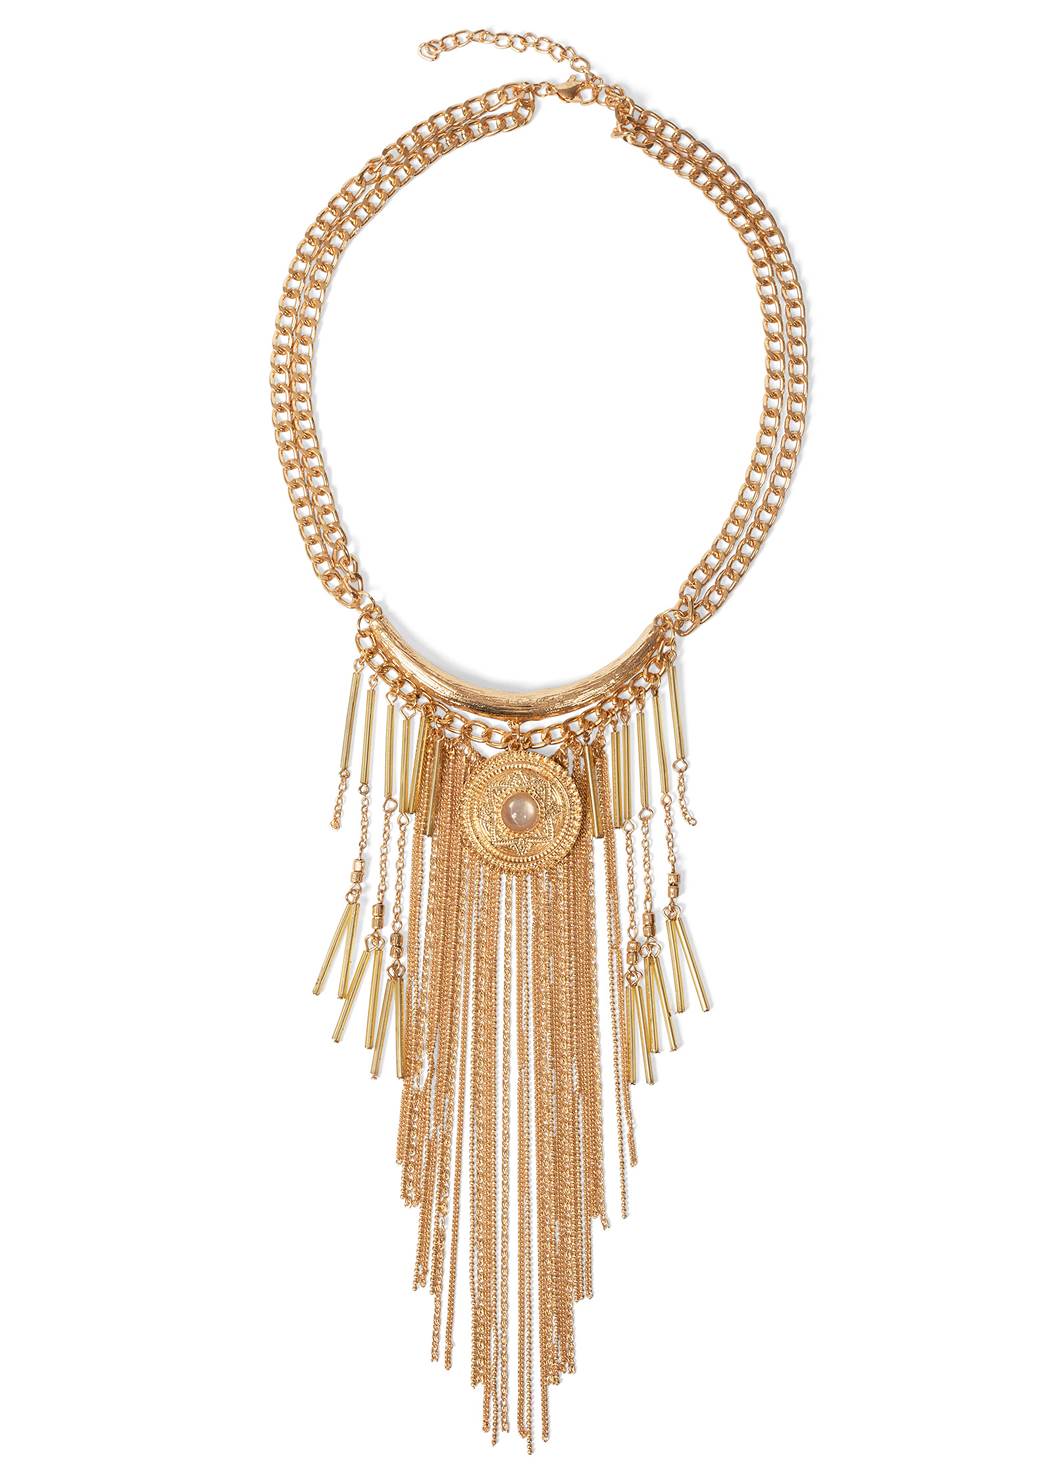 Tassel Beaded Necklace in Gold | VENUS